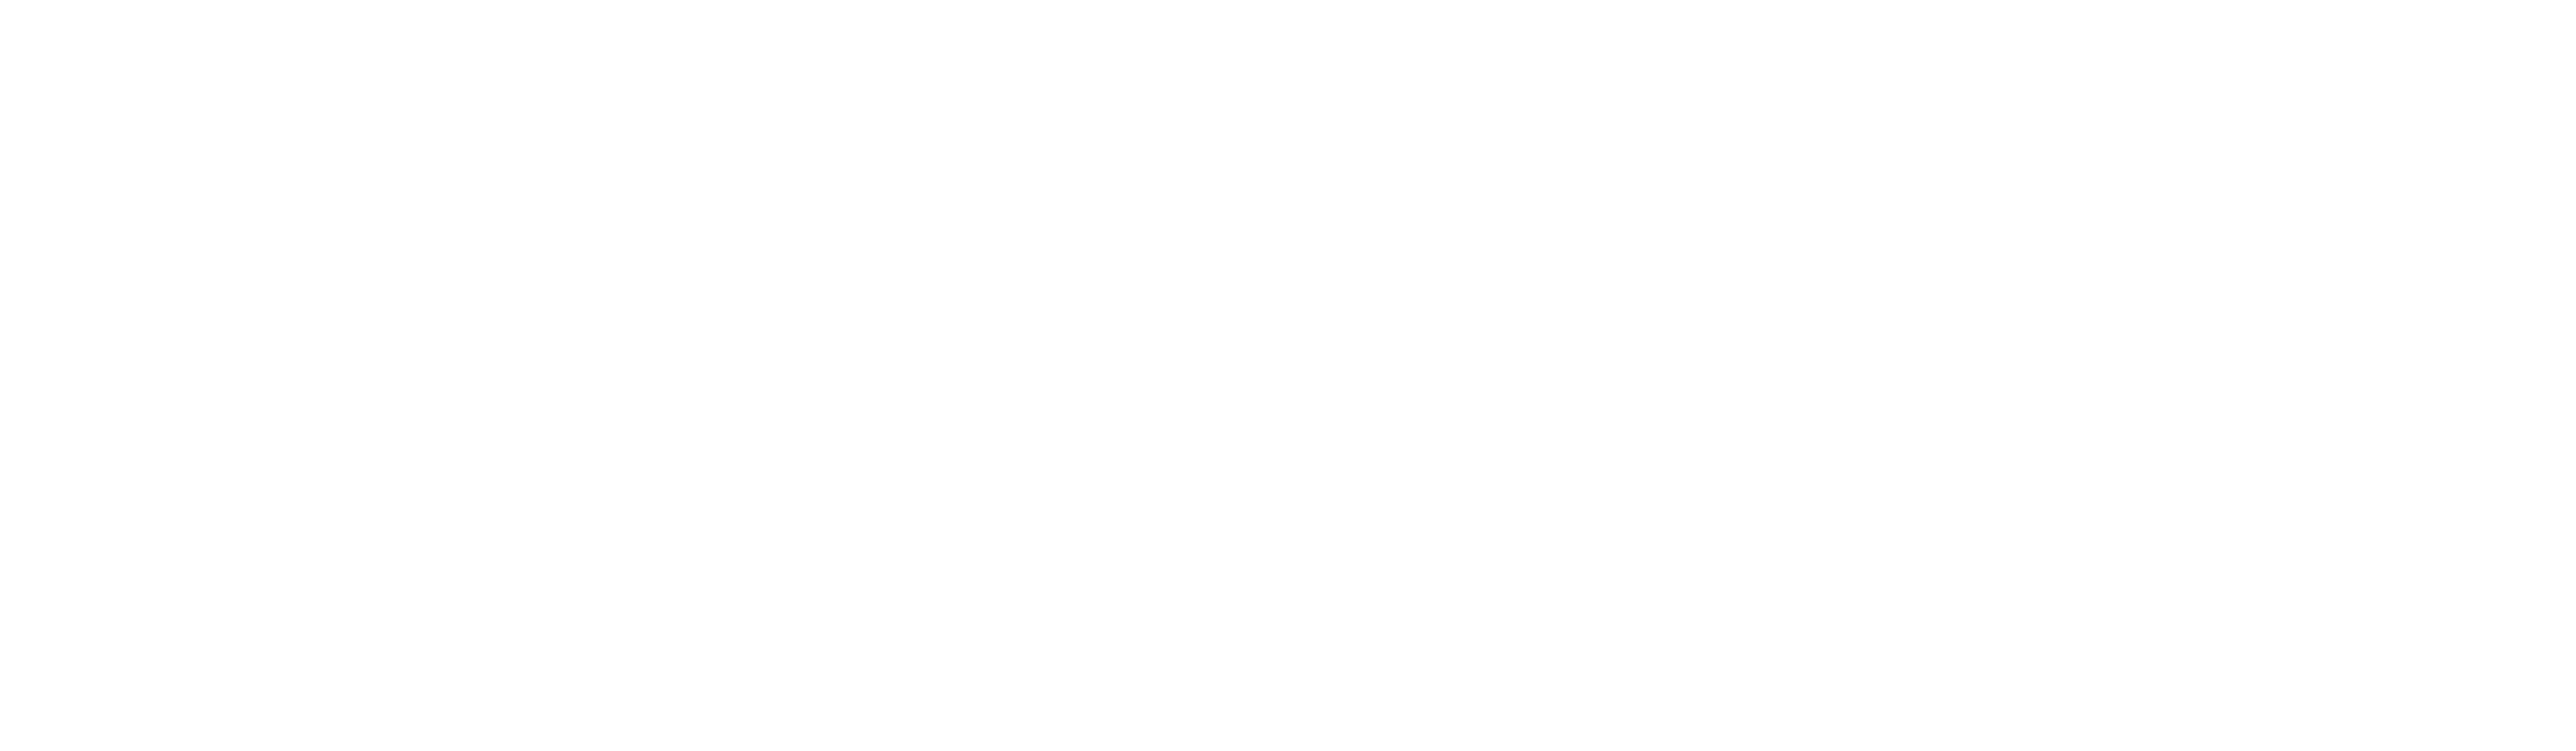 National Elite Sports Coaching